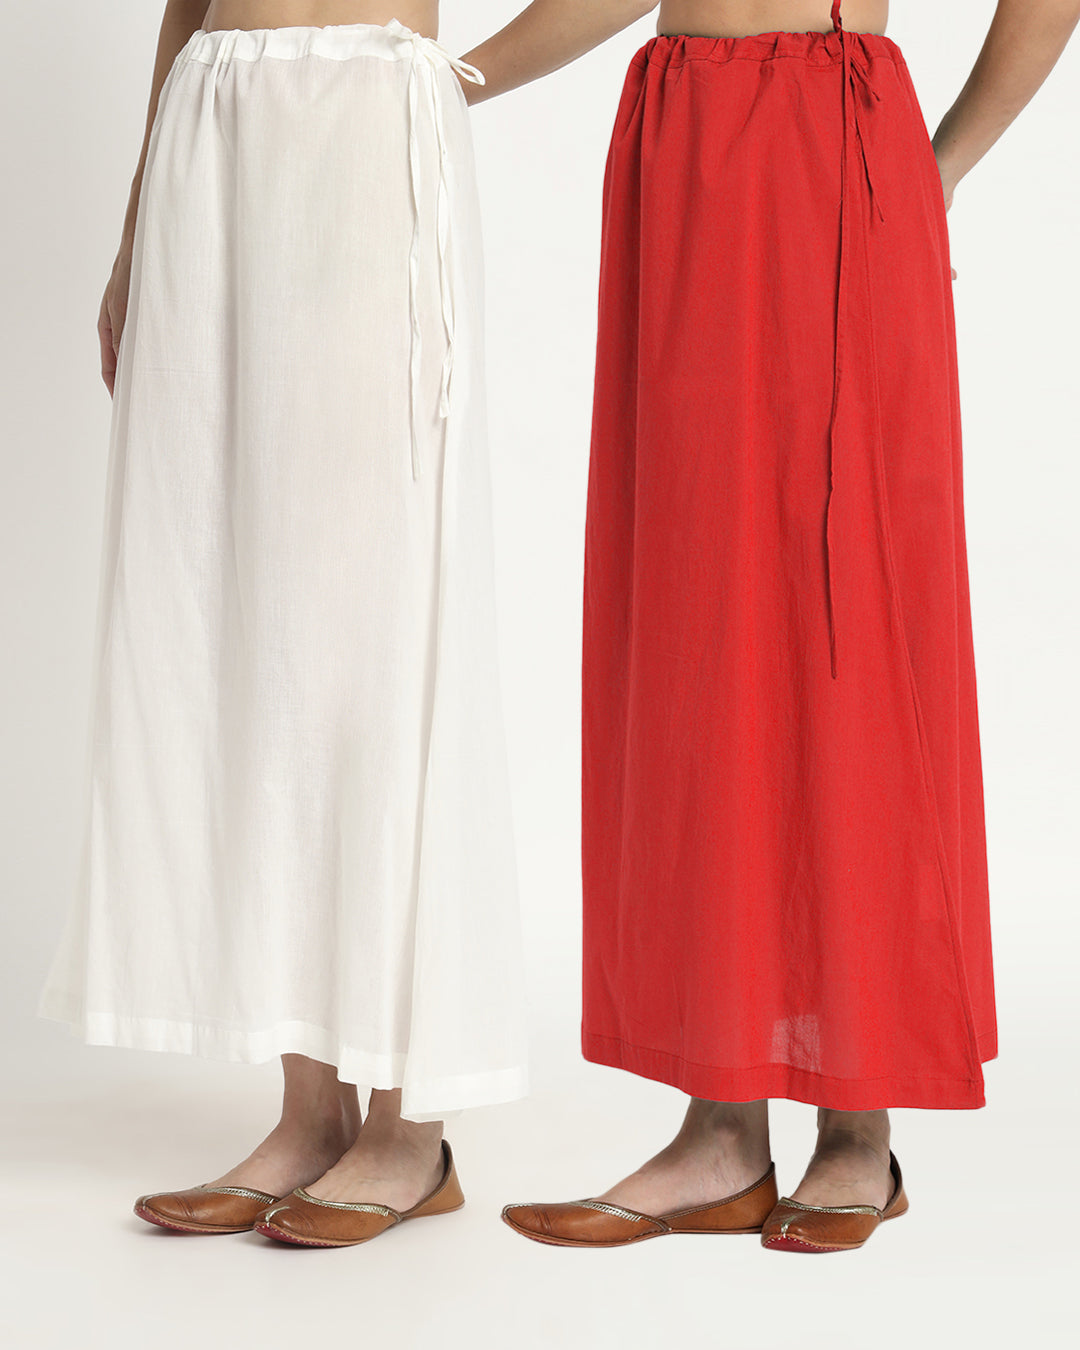 Combo: Pristine White & Classic Red Peekaboo Petticoat- Set of 2